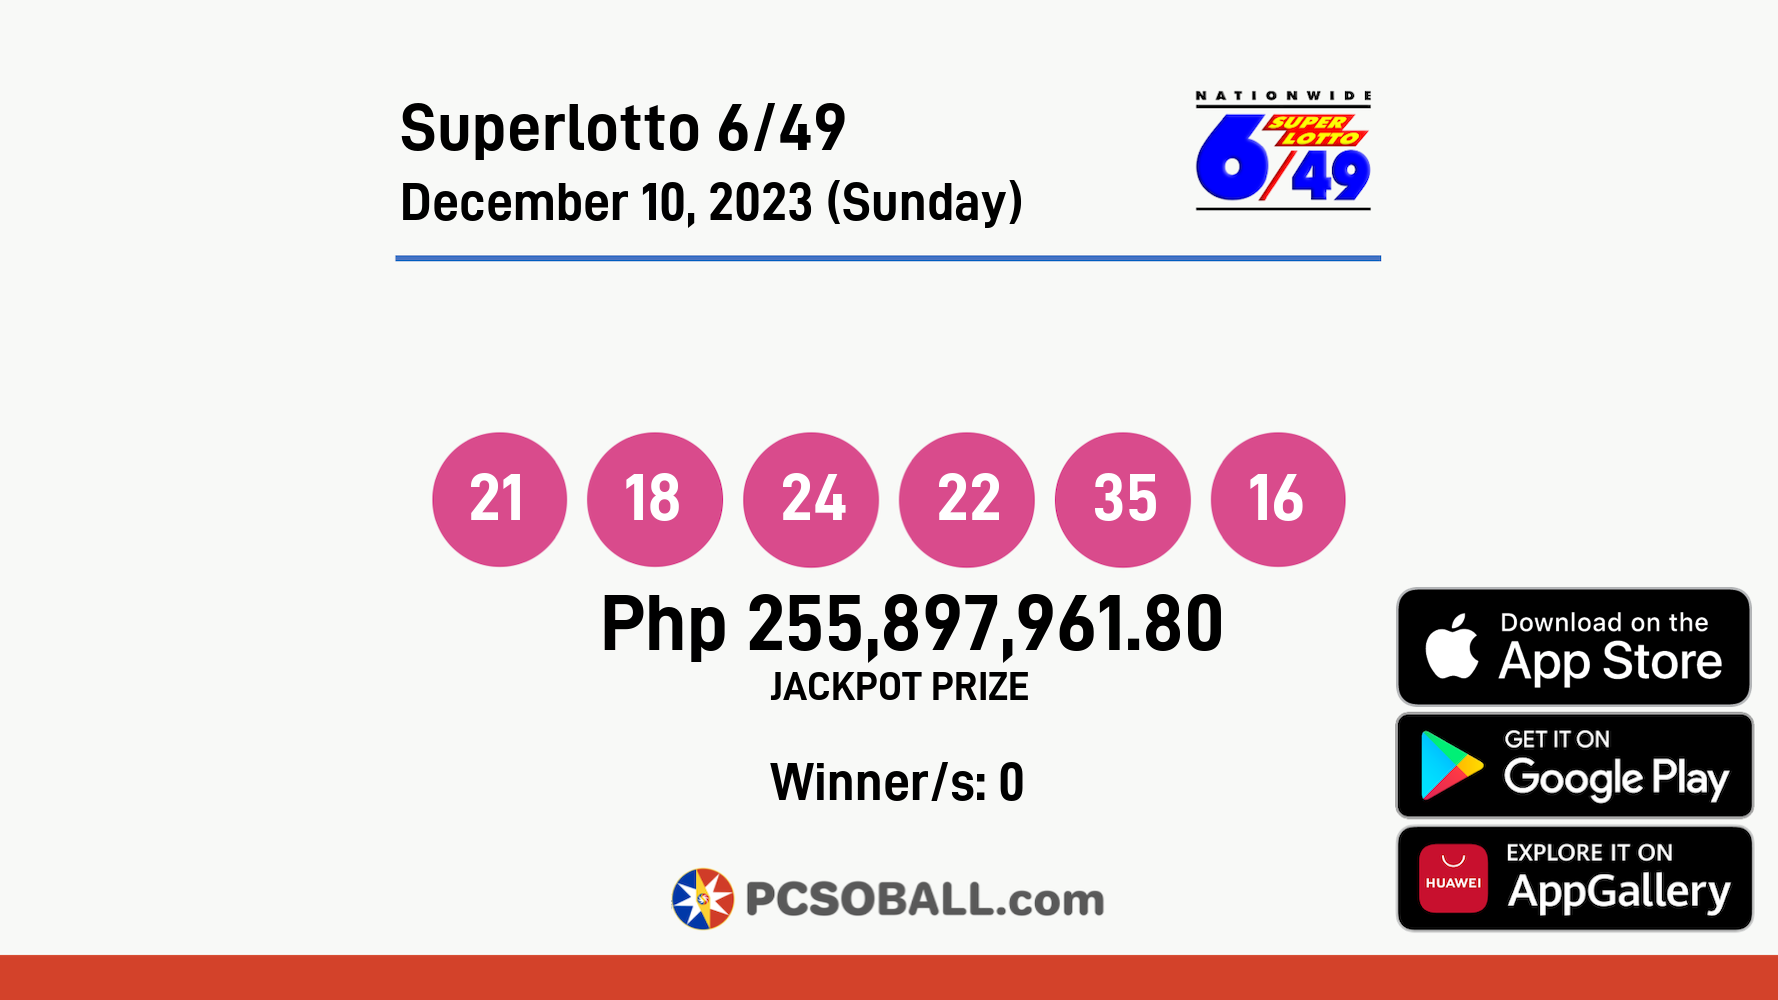 Superlotto 6/49 December 10, 2023 (Sunday) Result